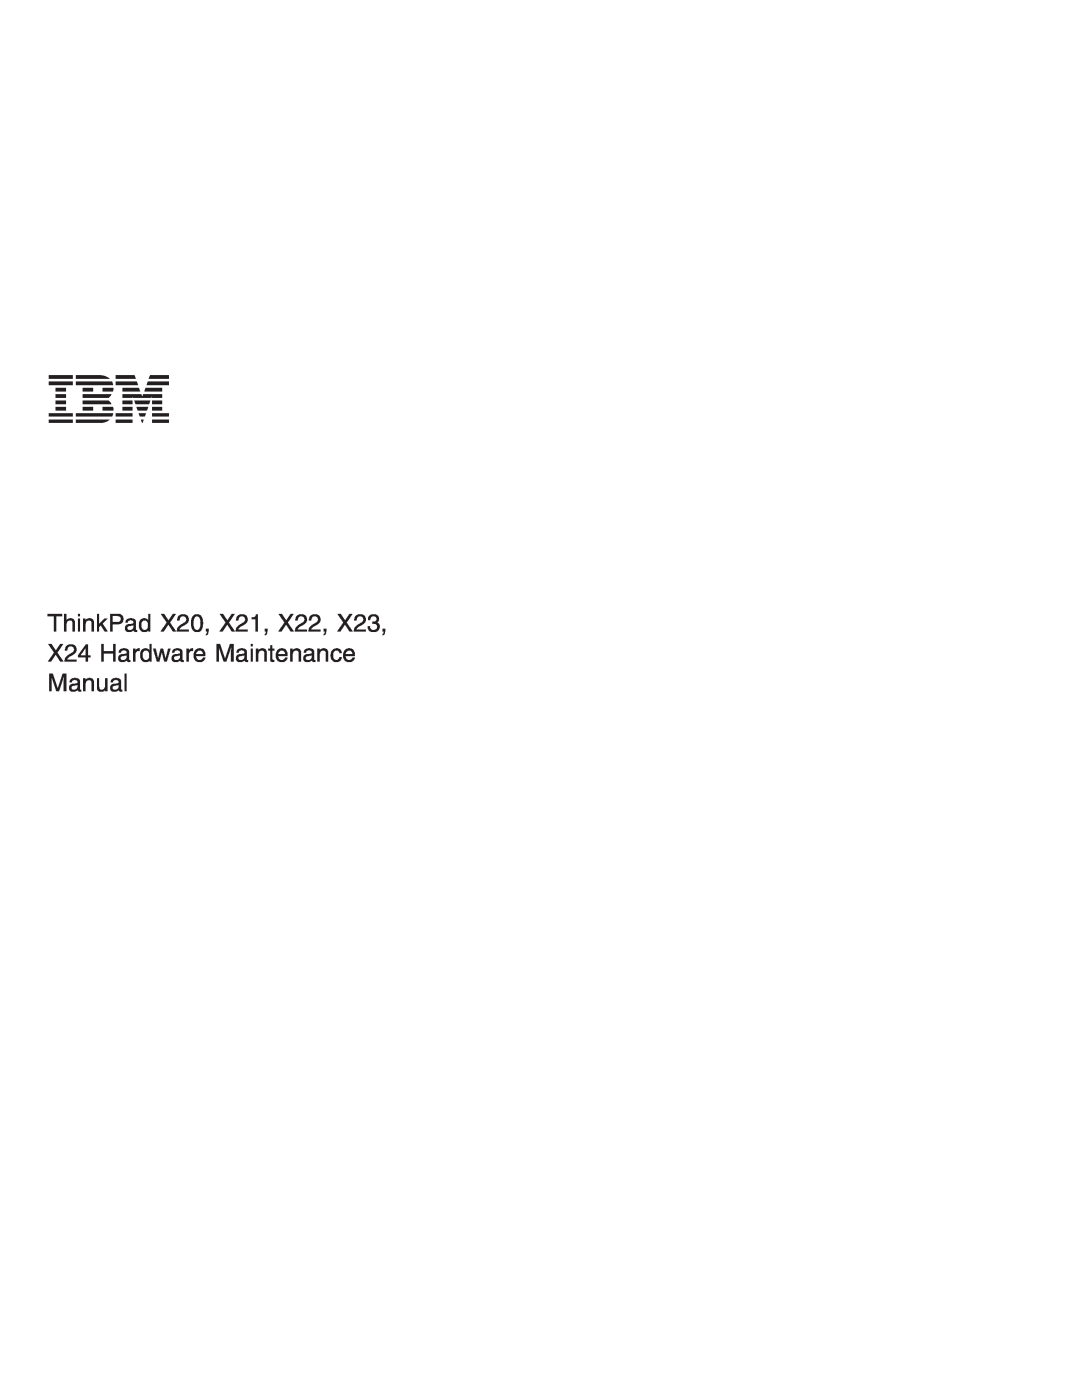 IBM X23 manual ThinkPad X20, X21, X22 X24 Hardware Maintenance Manual 